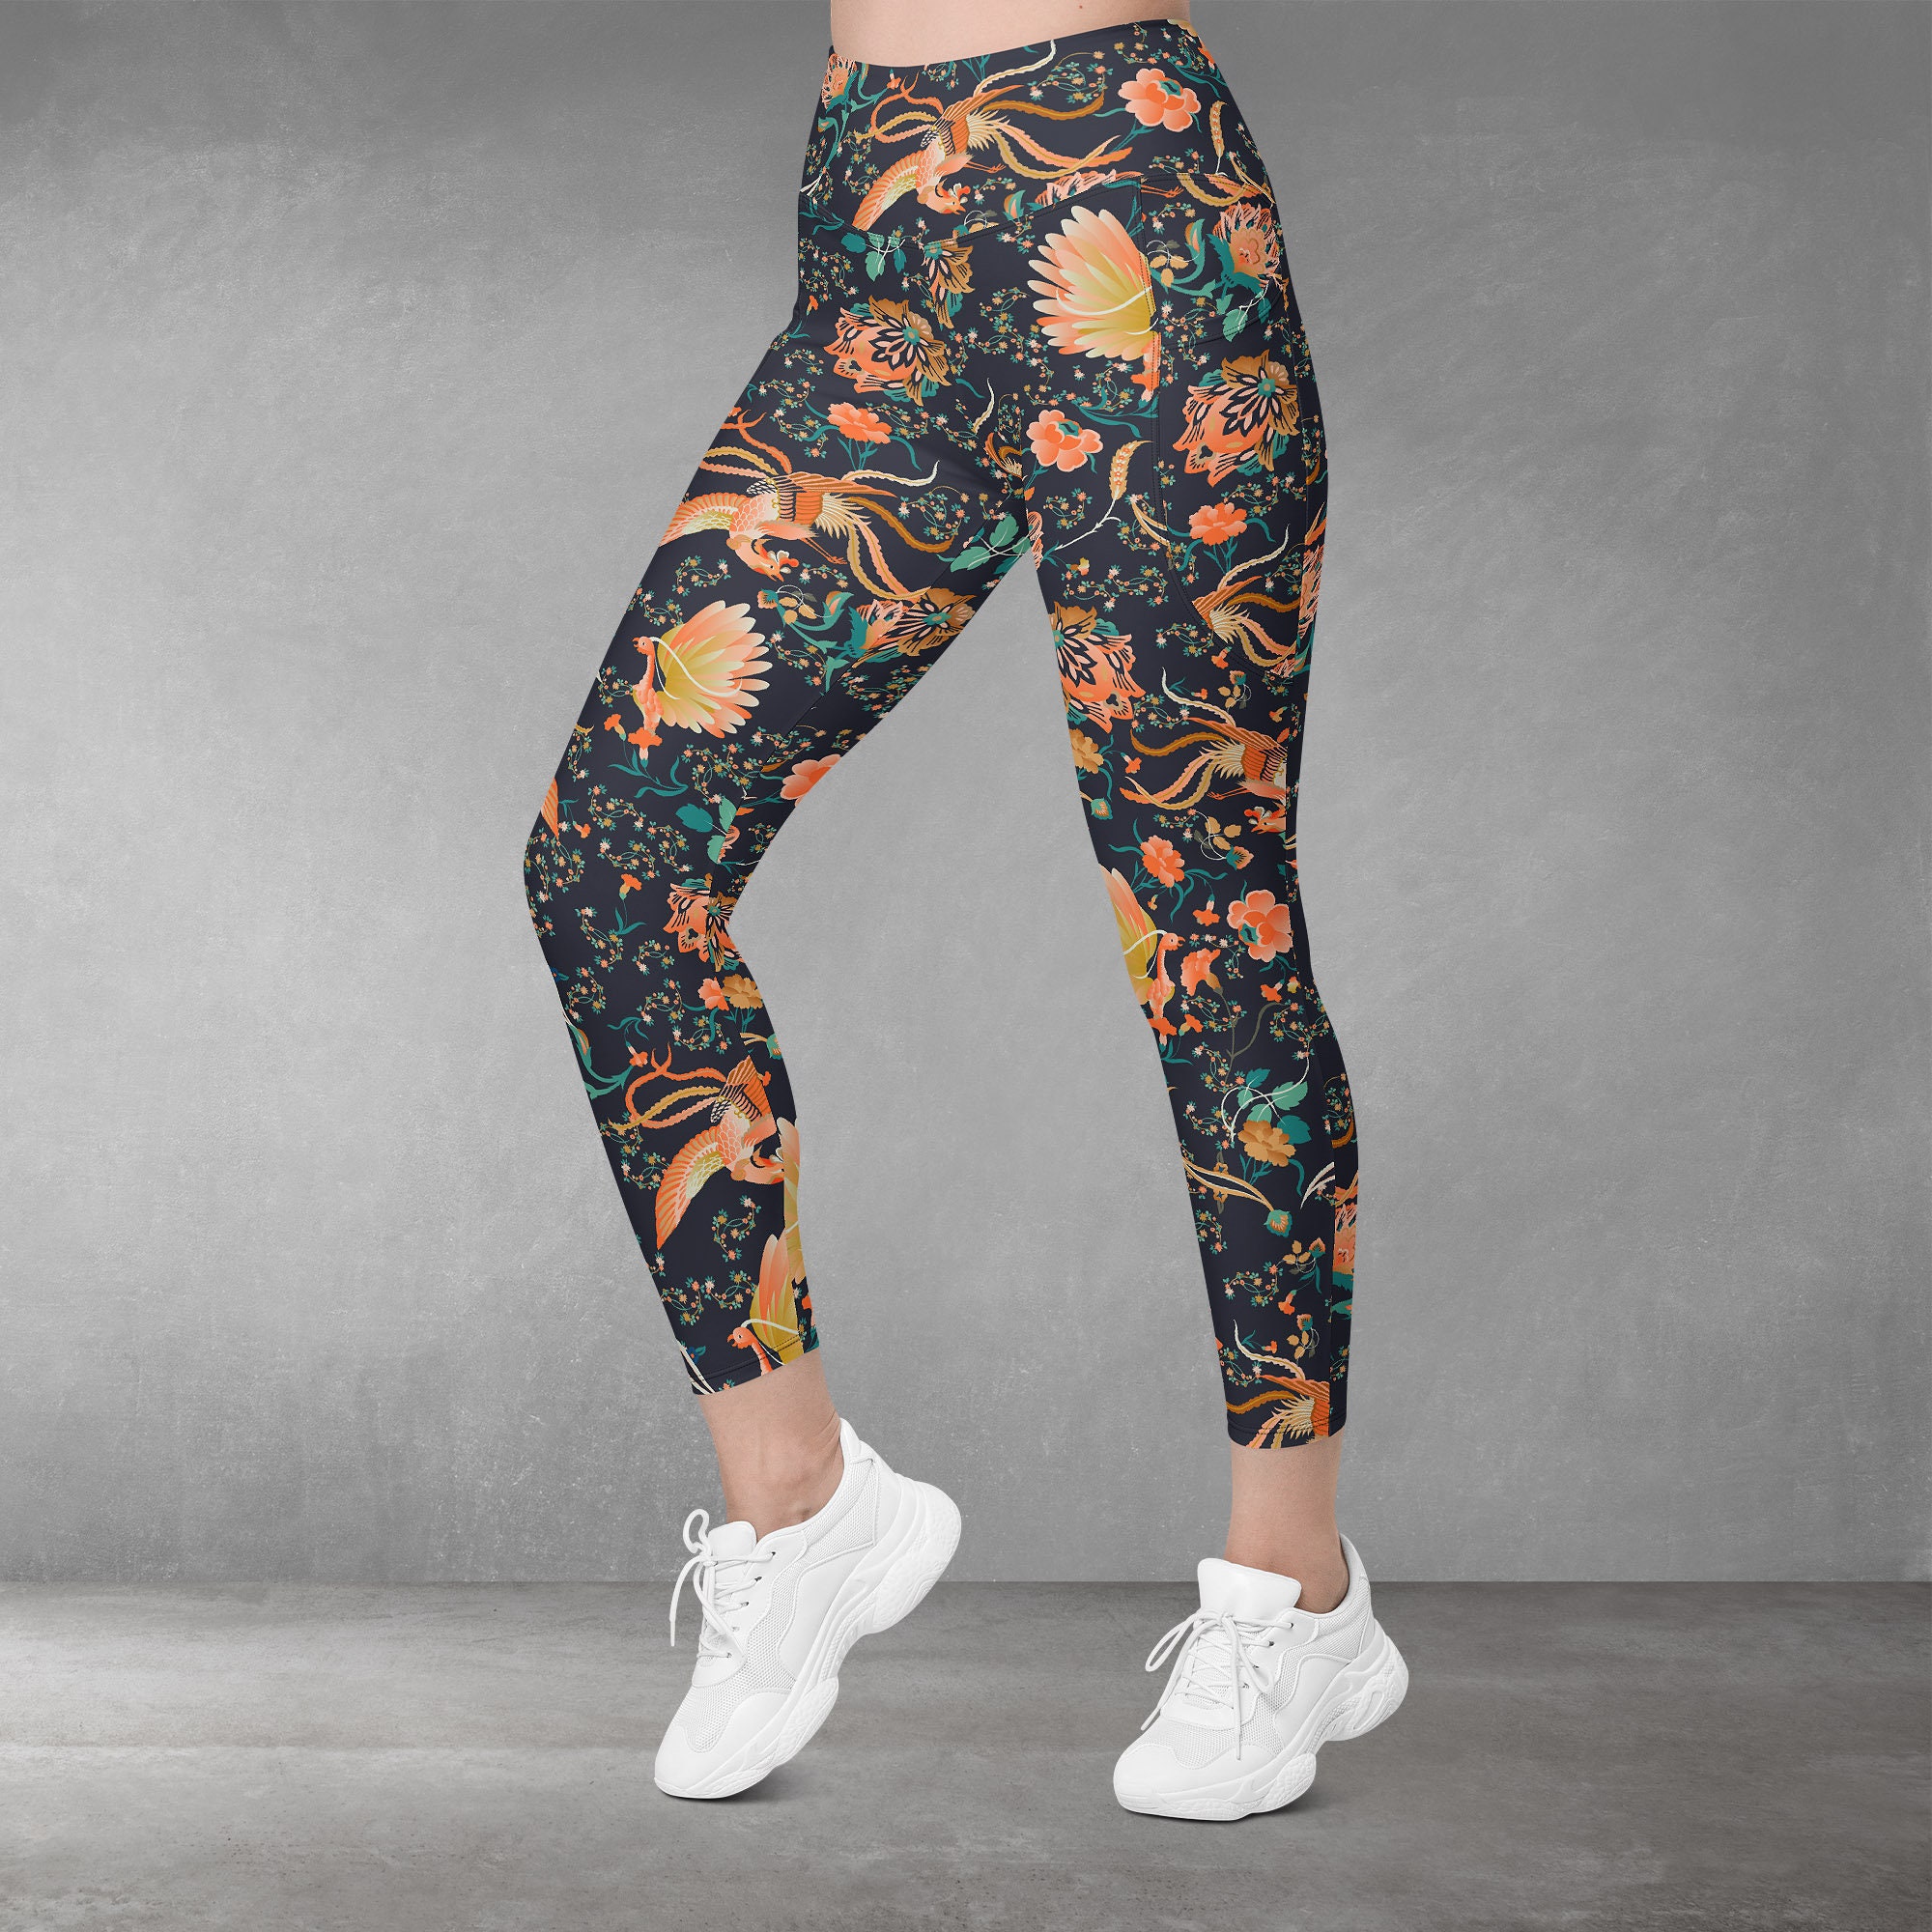 Floral Yoga Leggings Flowery Sport Leggings High Waist Gym Pants